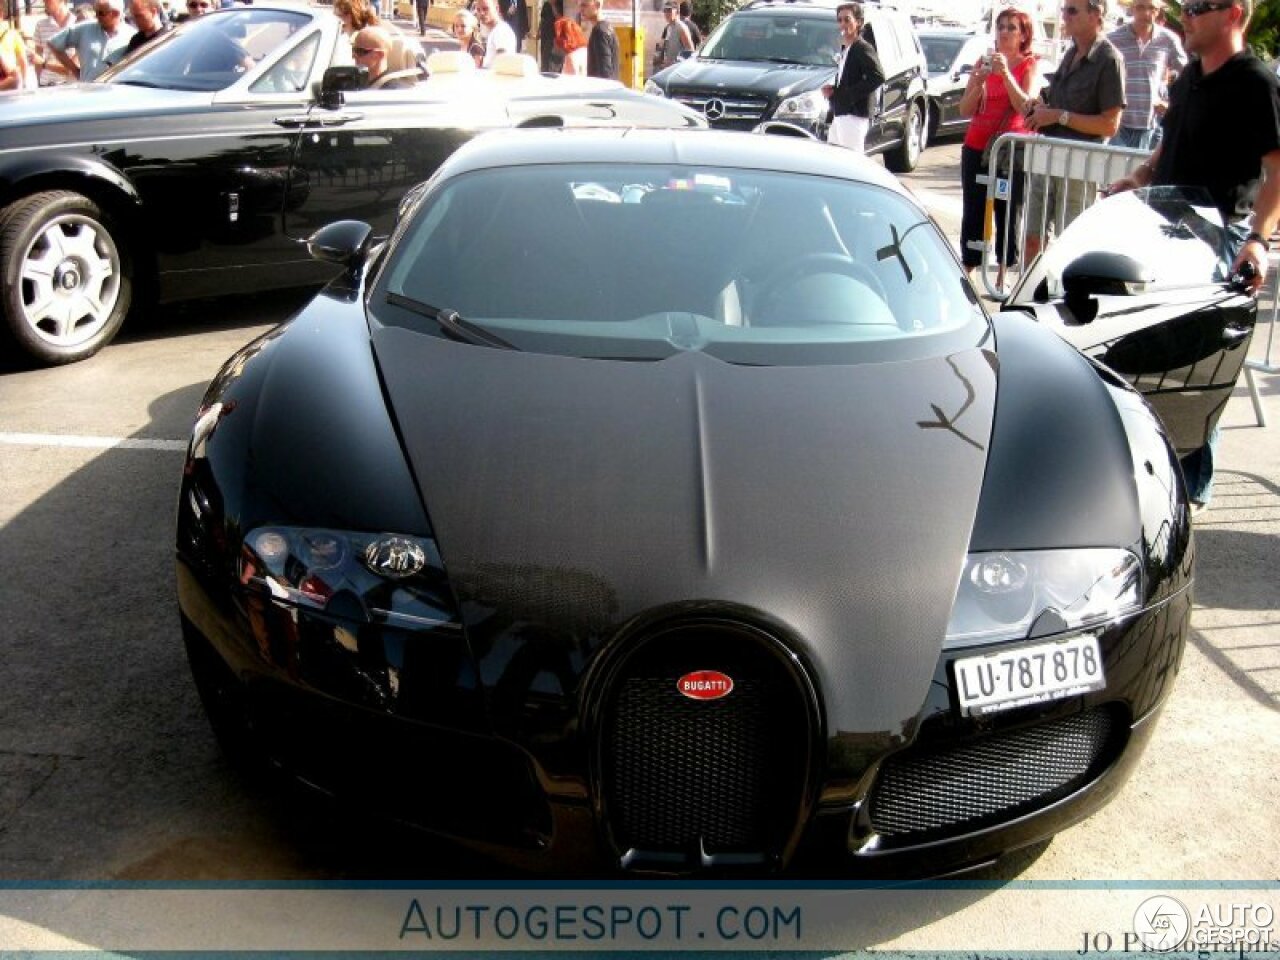 Bugatti Veyron 16.4 SK Limited Edition